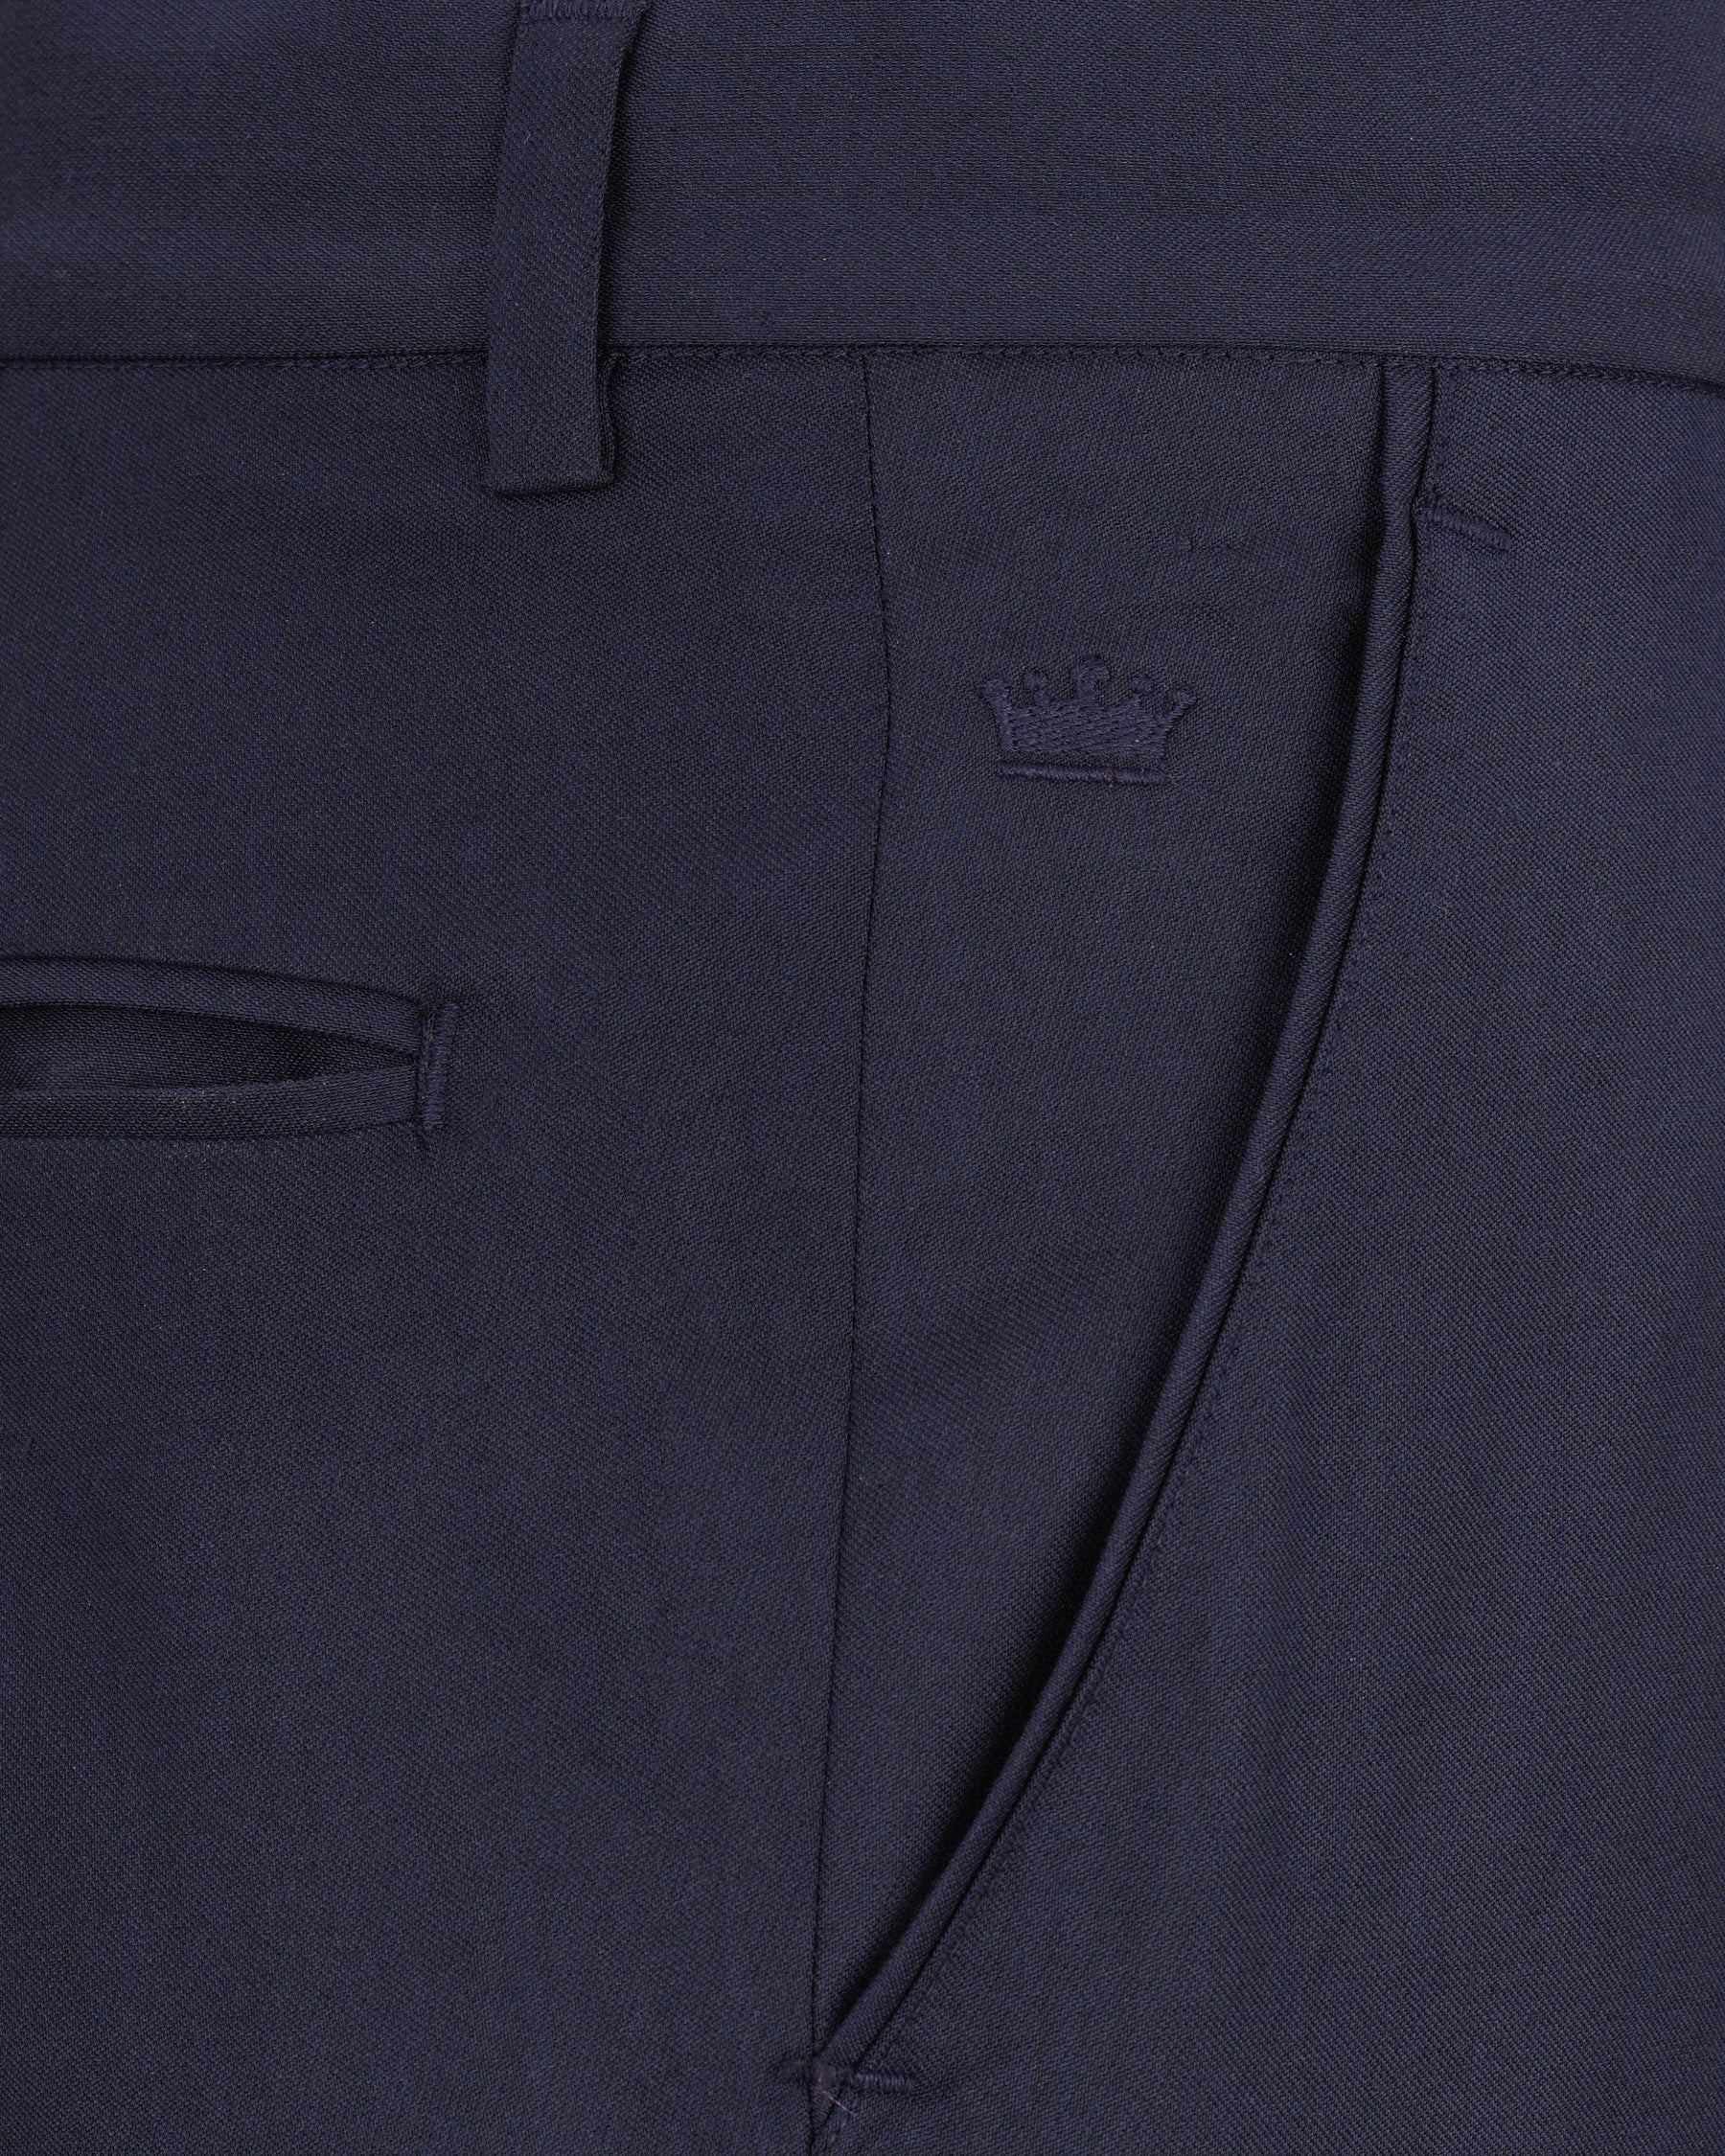 Gunmetal Blue Cross Placket Bandhgala Suit